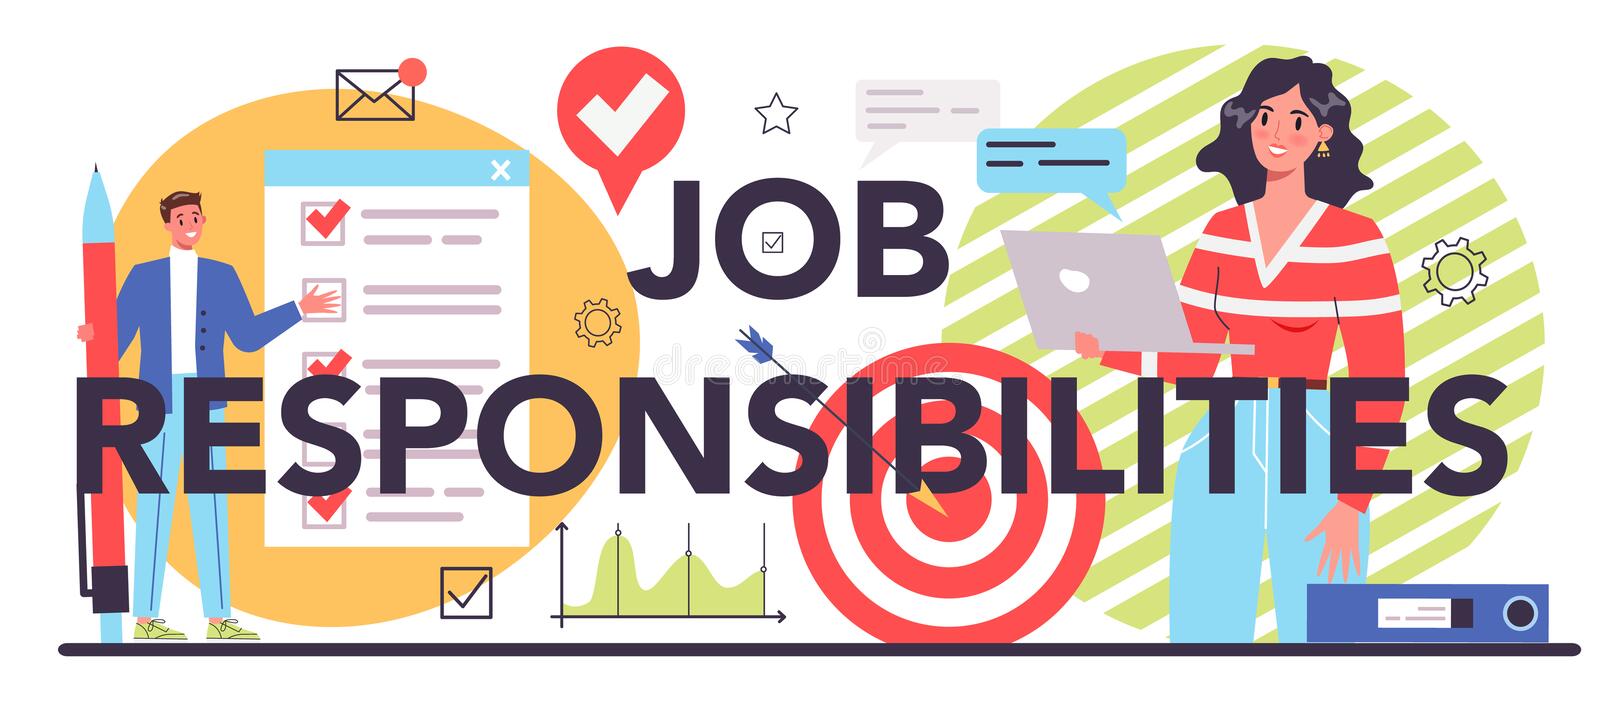 job-responsibilities-typographic-header-personnel-management-empolyee-adaptation-hr-manager-prov.jpg